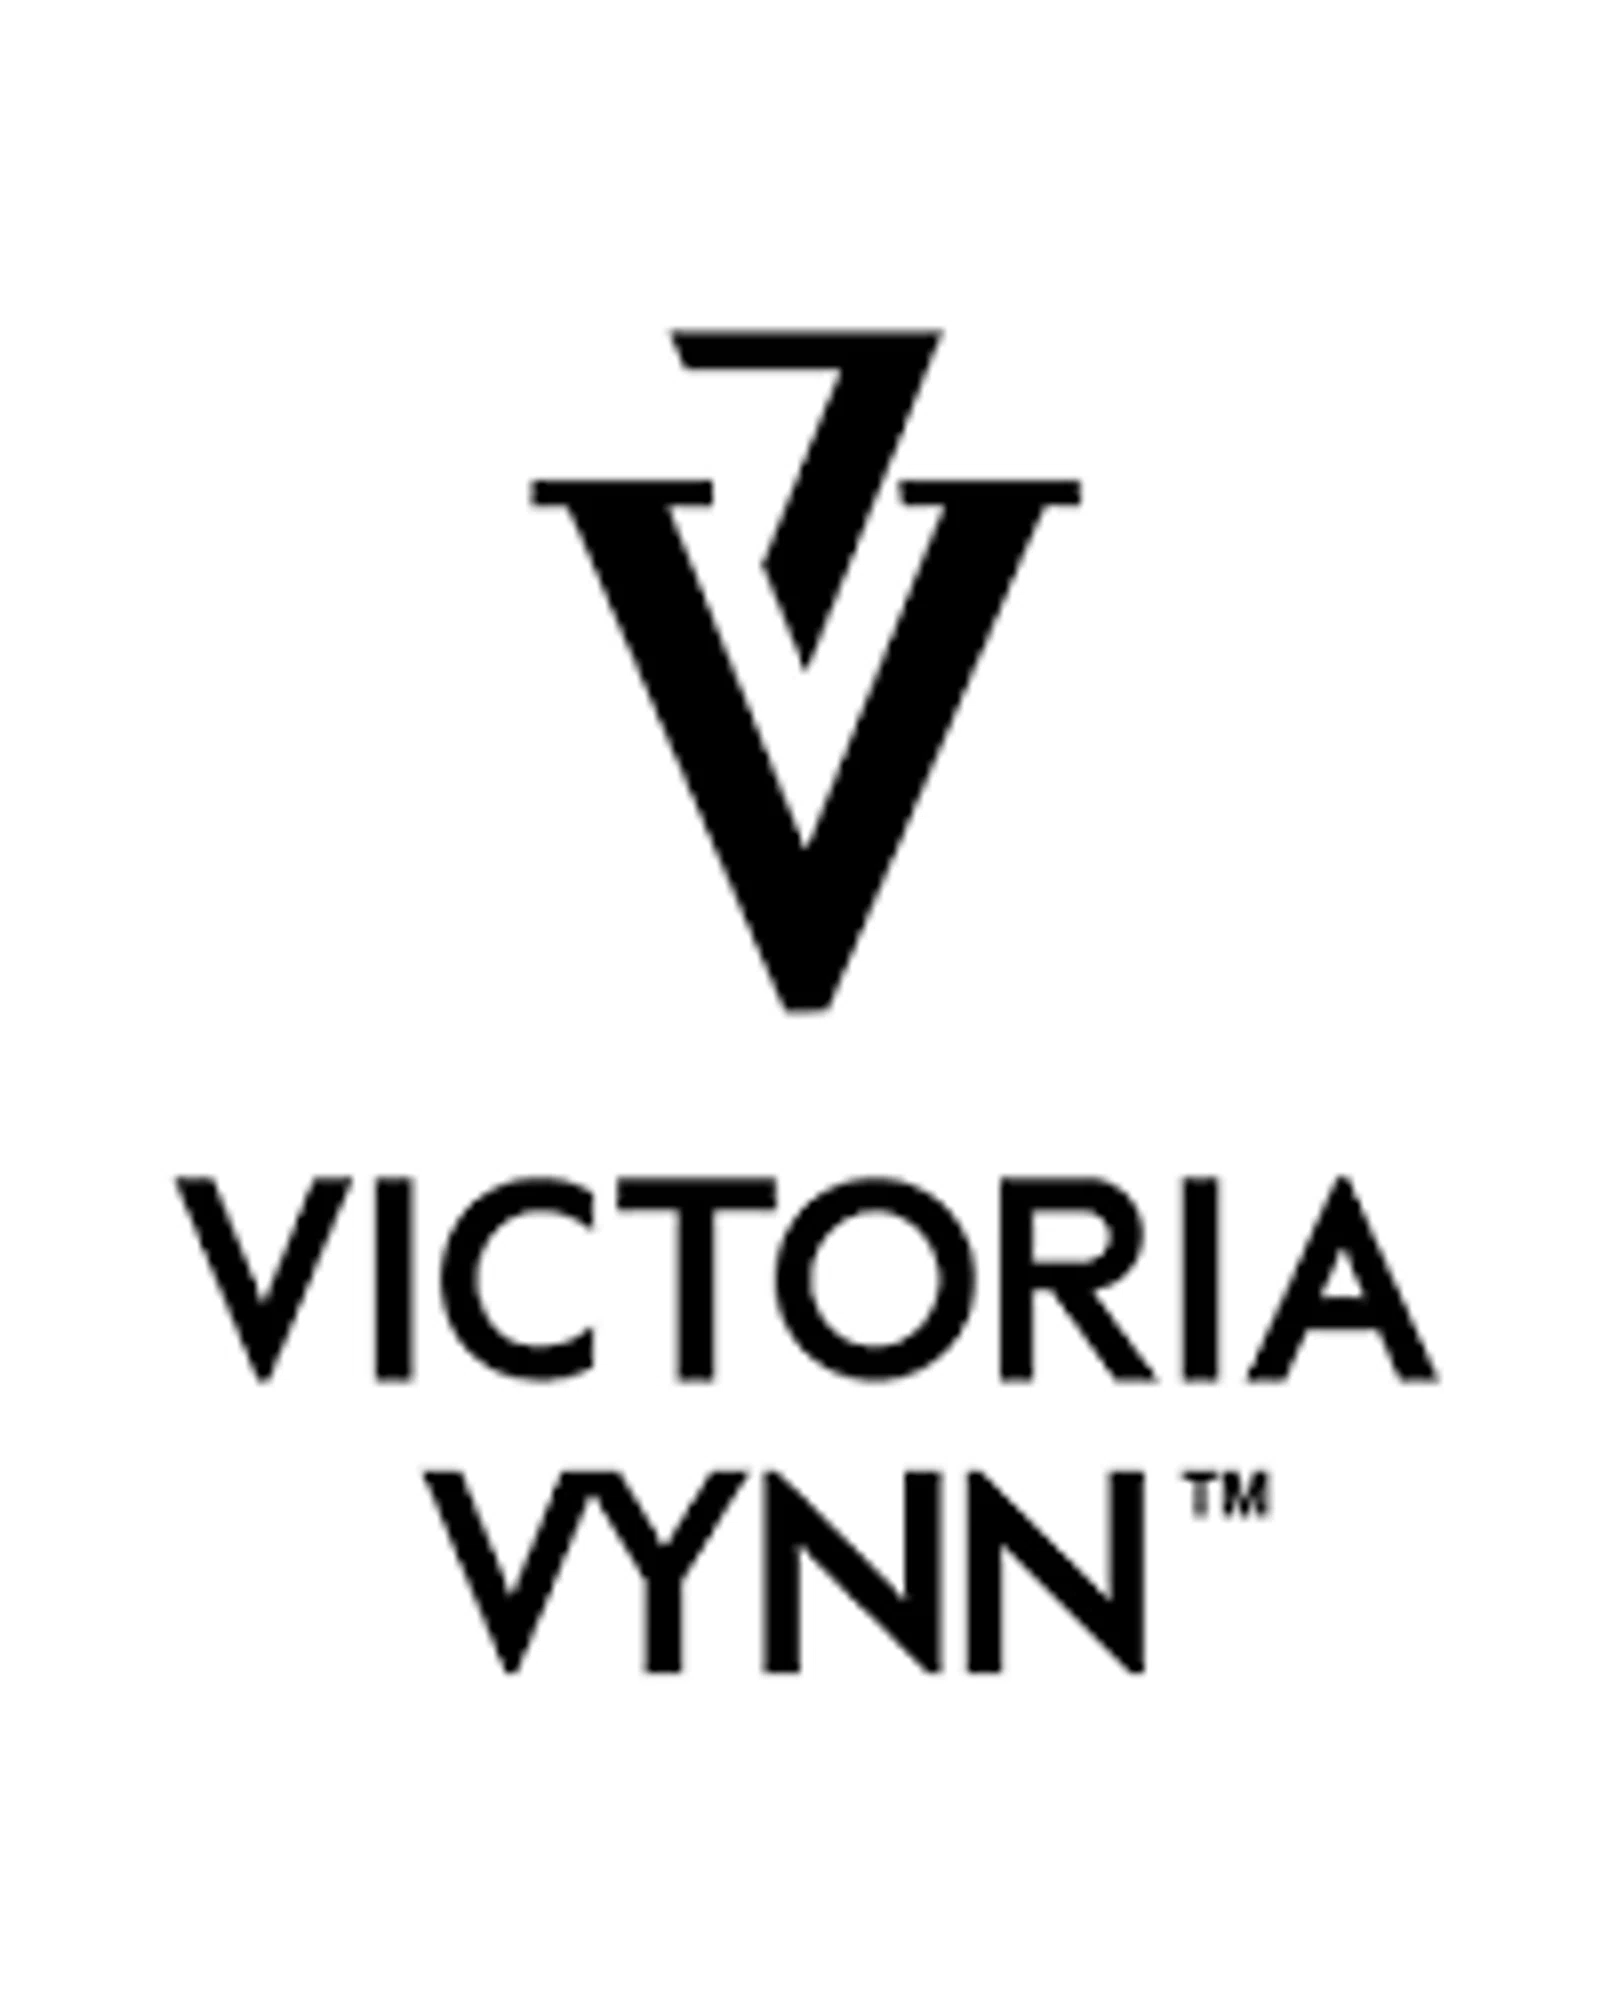 Victoria VYNN